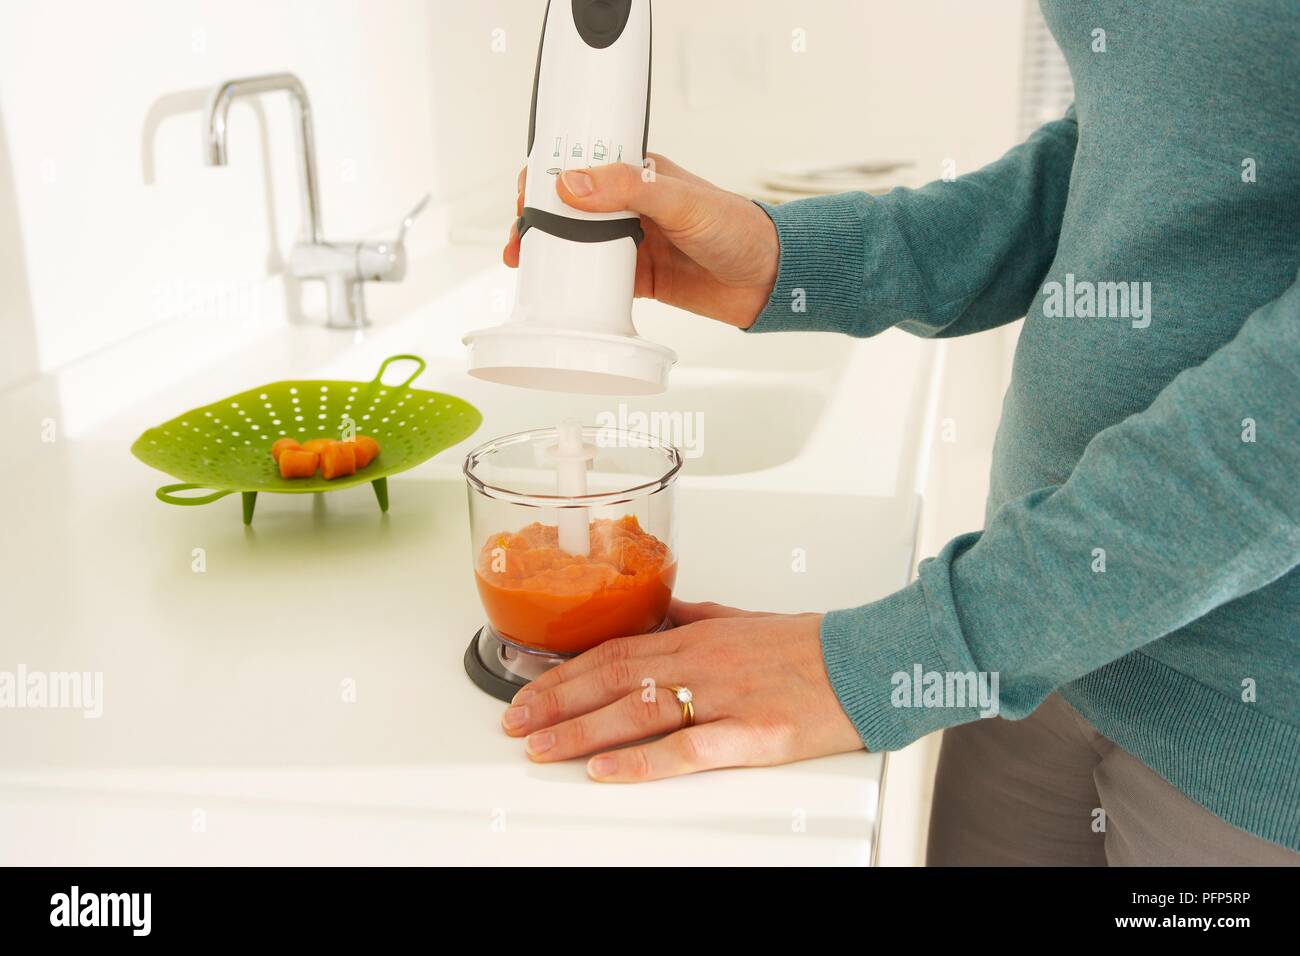 Woman preparing baby food using blender, close-up Stock Photo